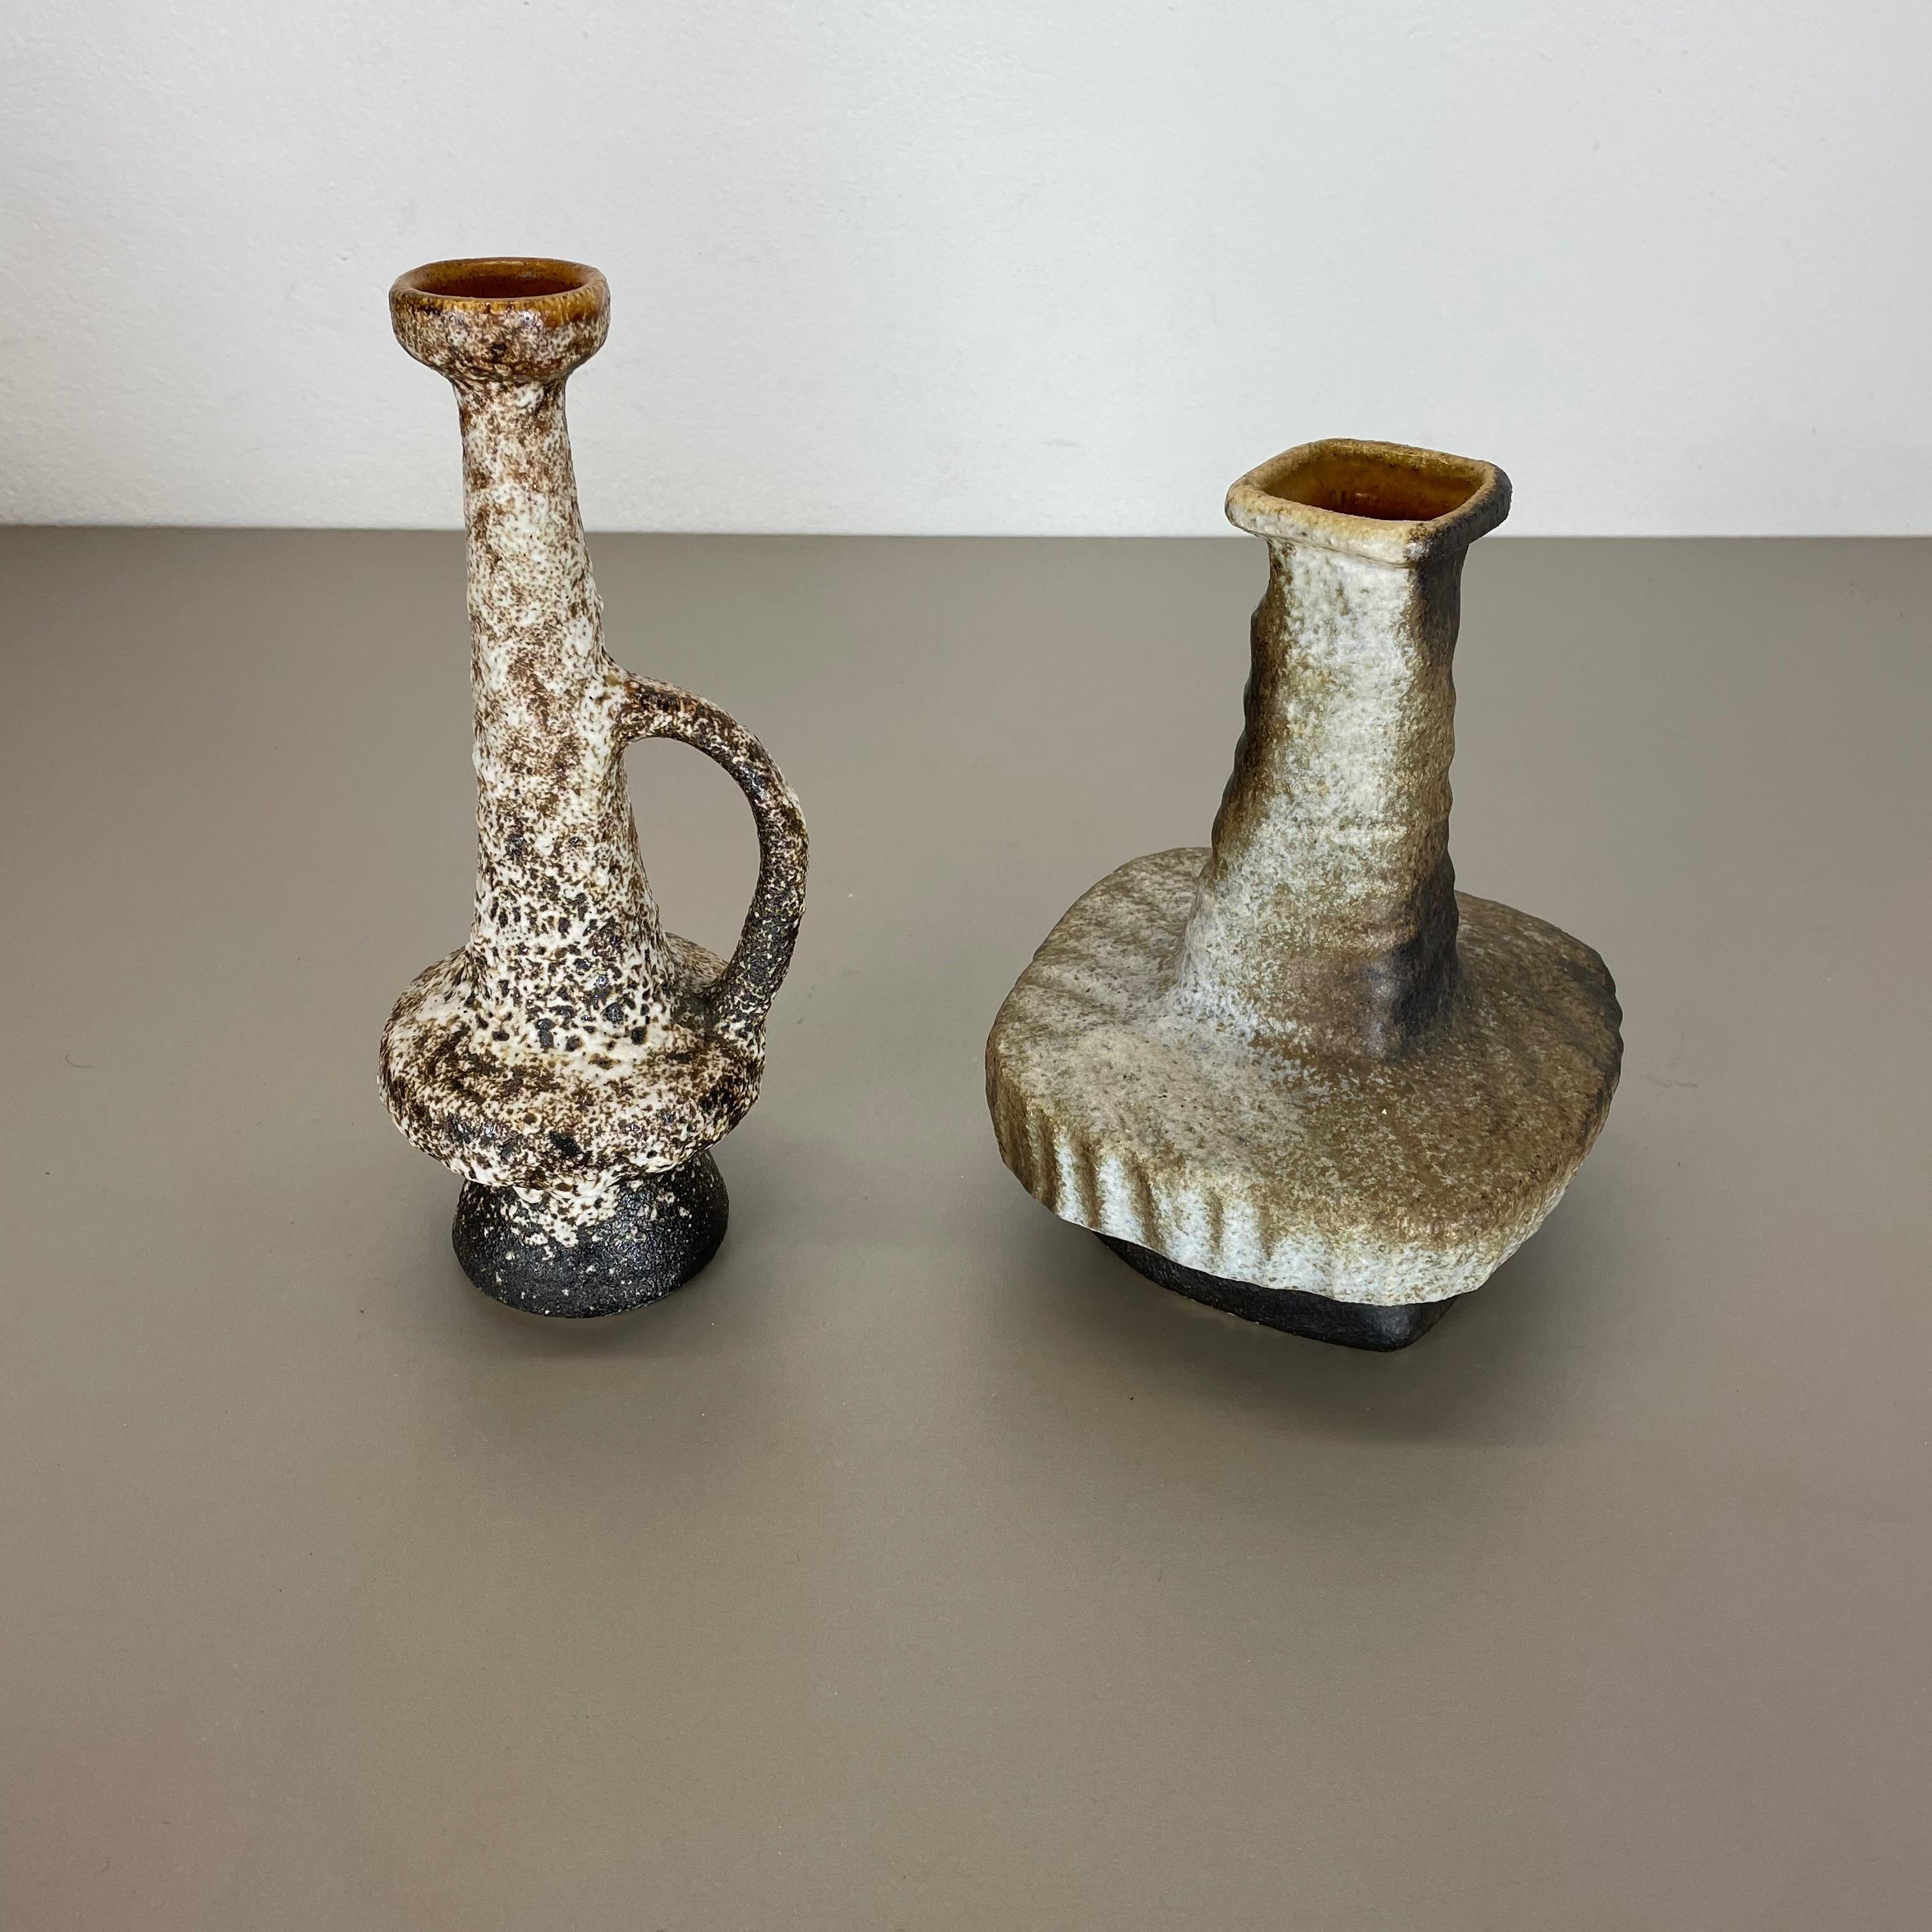 Dutch Original Ceramic Studio Pottery Vase by Piet Vest Ceramics, Netherlands, 1970s For Sale